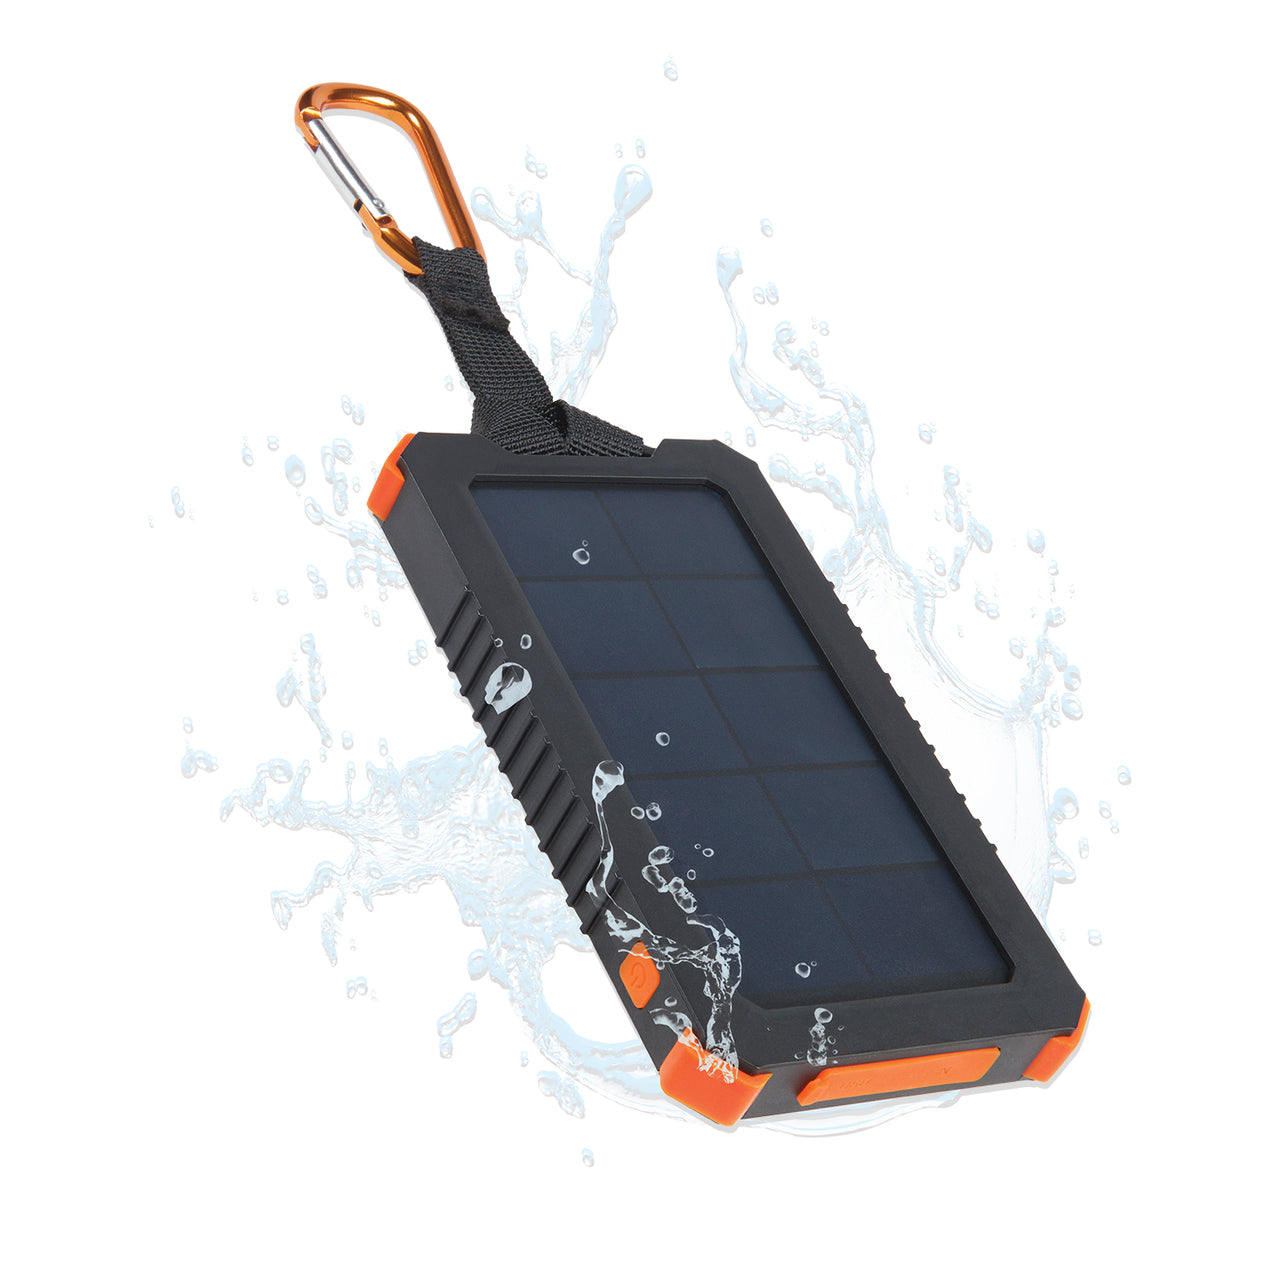 Xtreme Solar Powerbank Ladegeräte - 5000 mAh - Schwarz/Orange